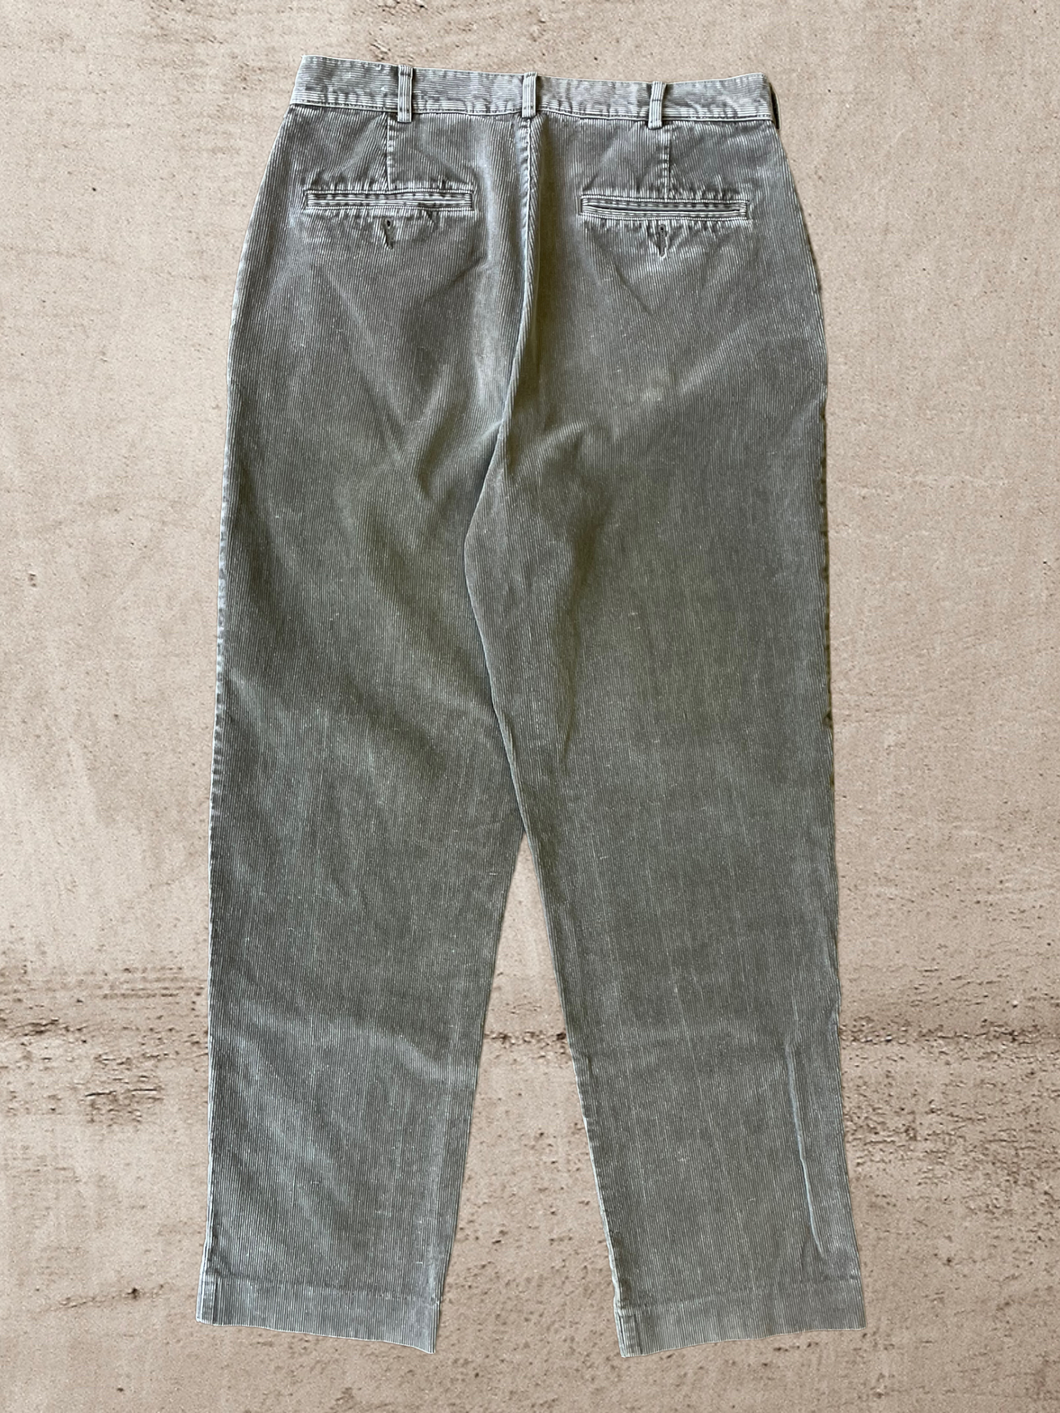 90s Corduroy Brown Pants -32x30